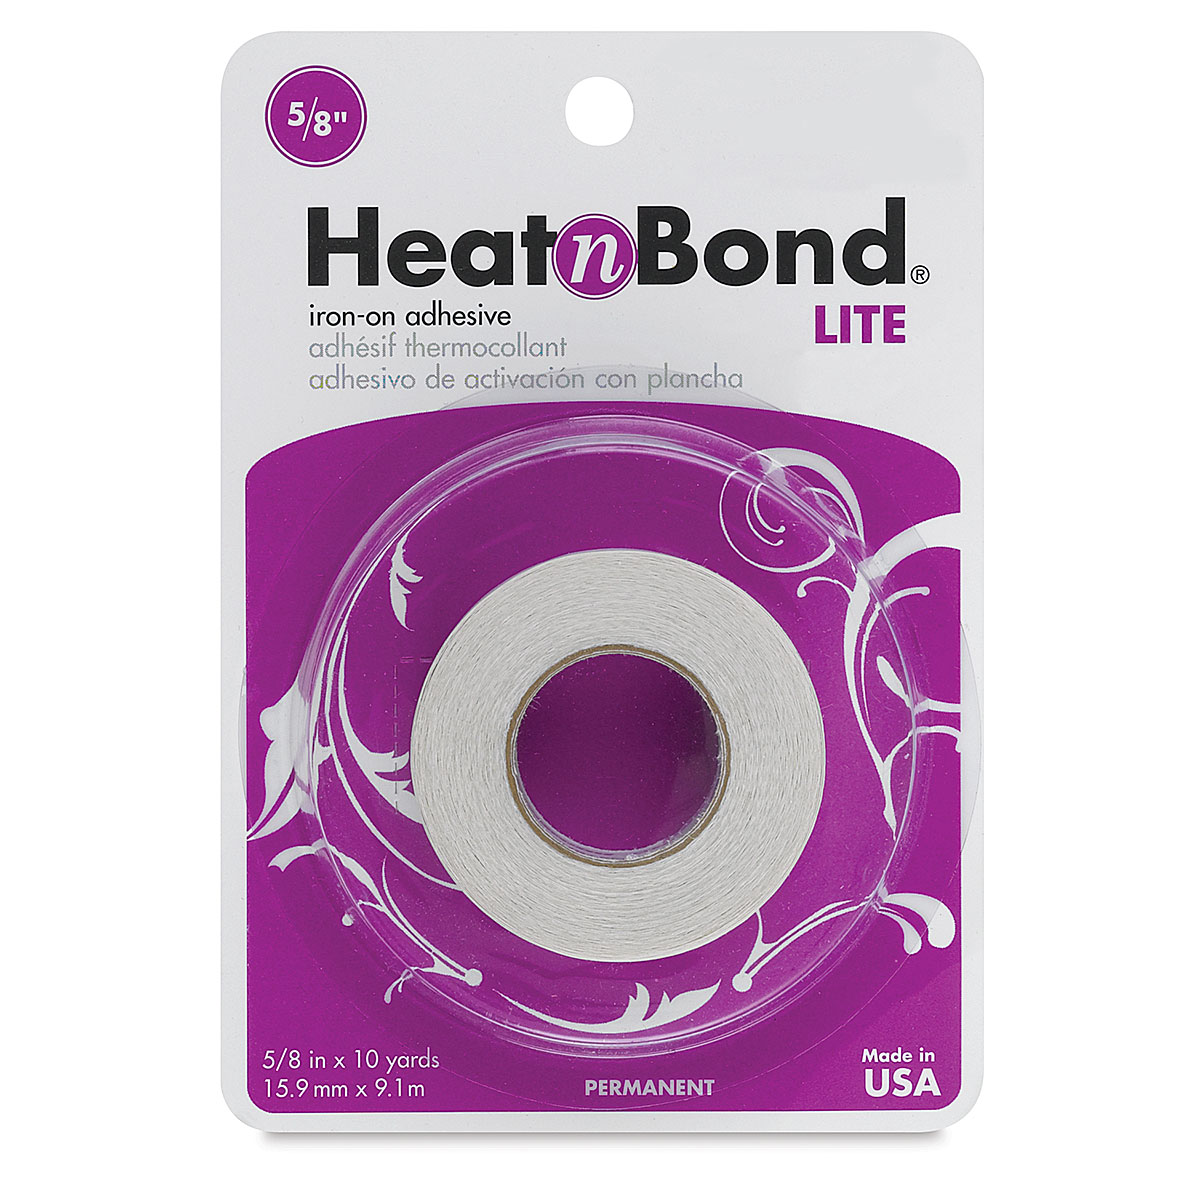 Thermoweb 17-inch x 5 yd Heat-n-Bond Ultra Hold Iron-On Adhesive